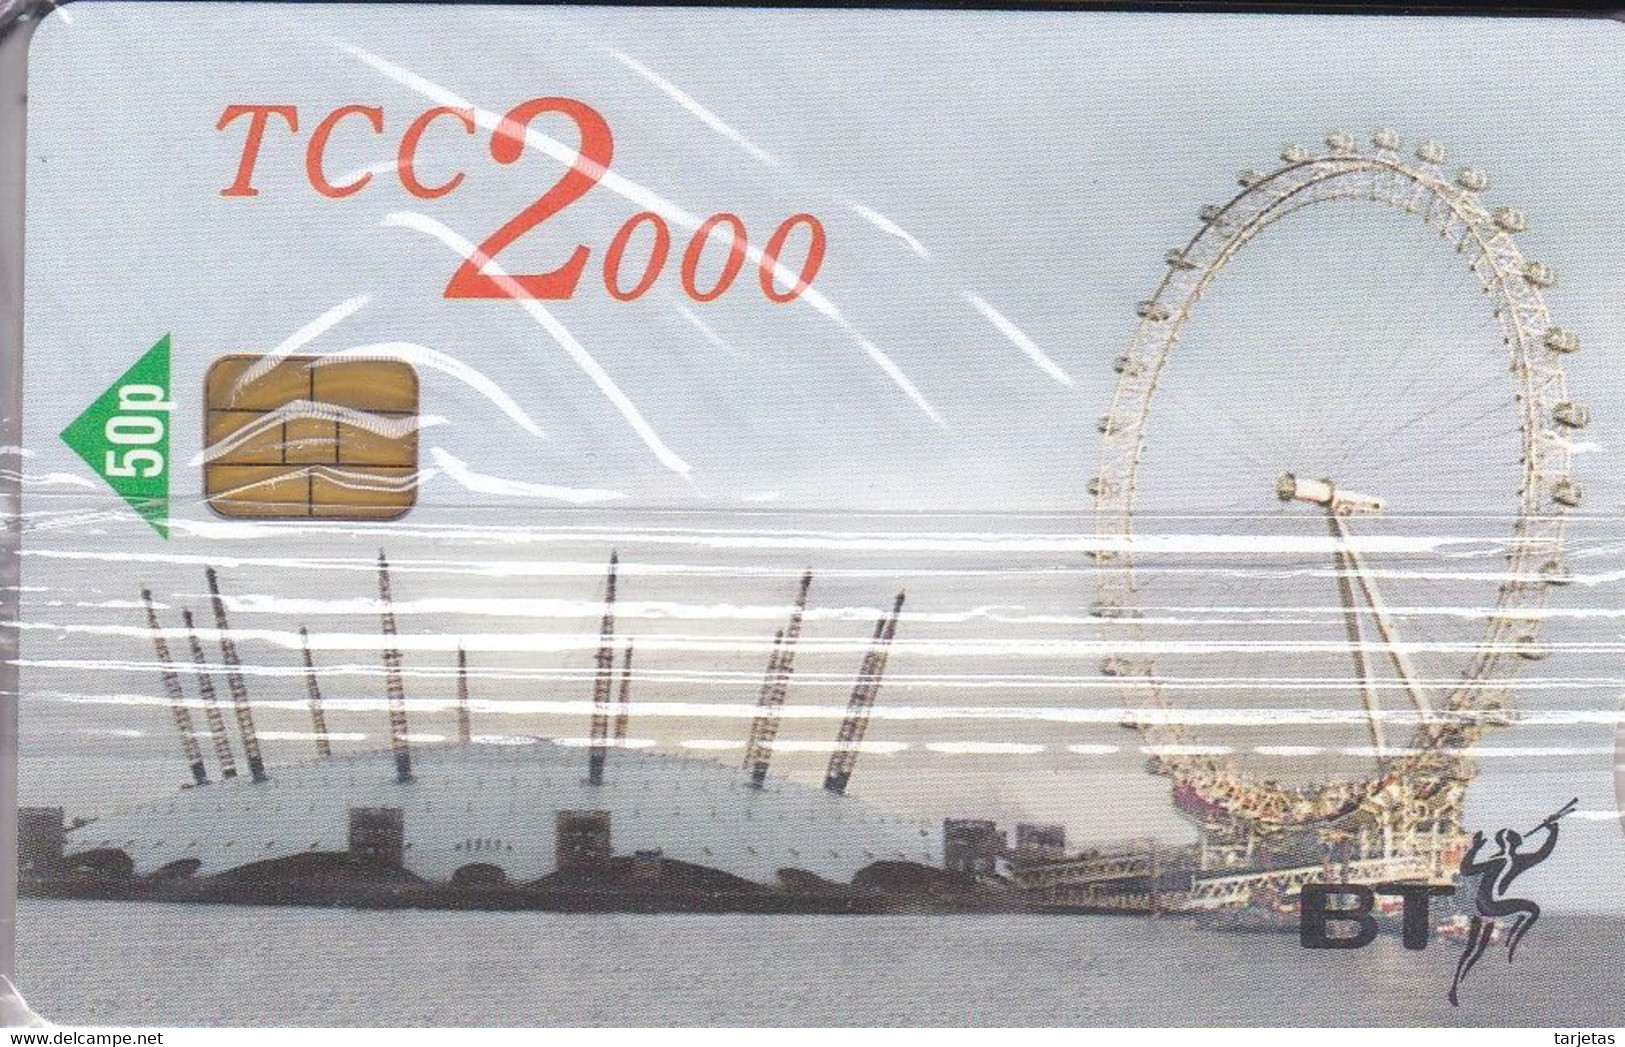 TARJETA DEL REINO UNIDO DE BT TCC 2000 (NUEVA-MINT) NORIA DE LONDRES - BT Promotionnelles